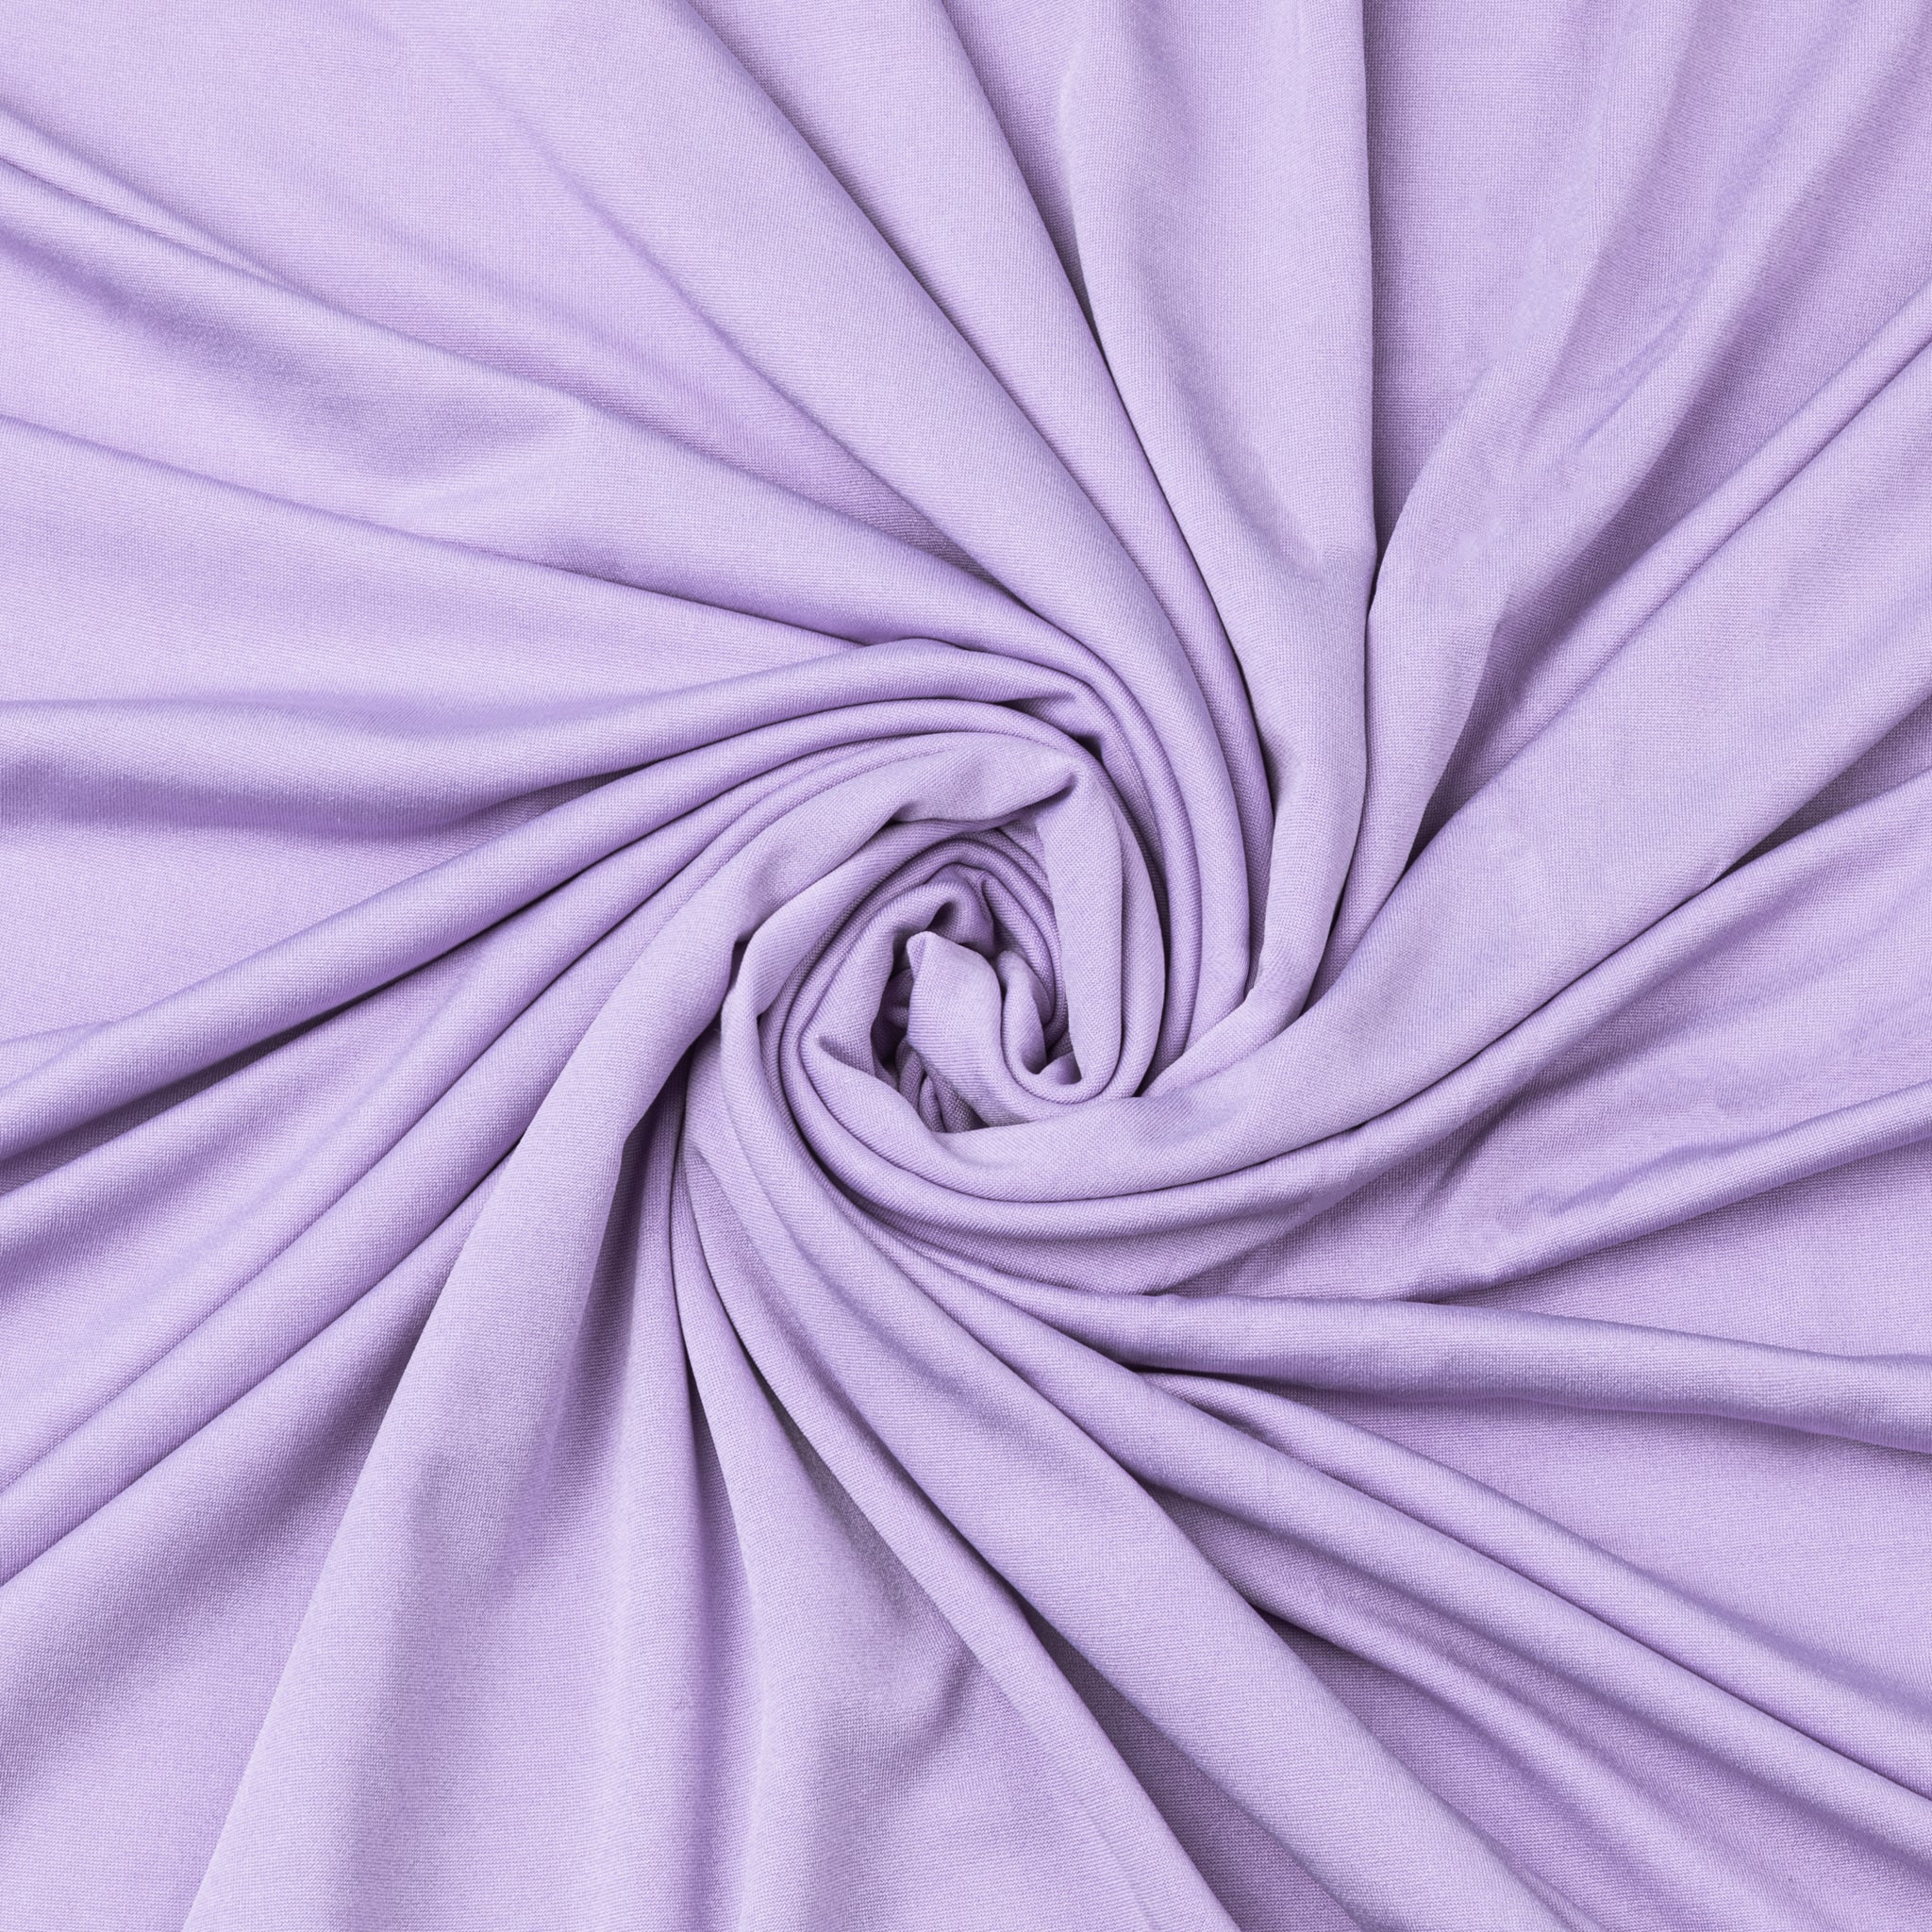 Metallic Spandex Purple 4-Way Stretch Poly/Spandex Fabric by the Yard  D248.24 